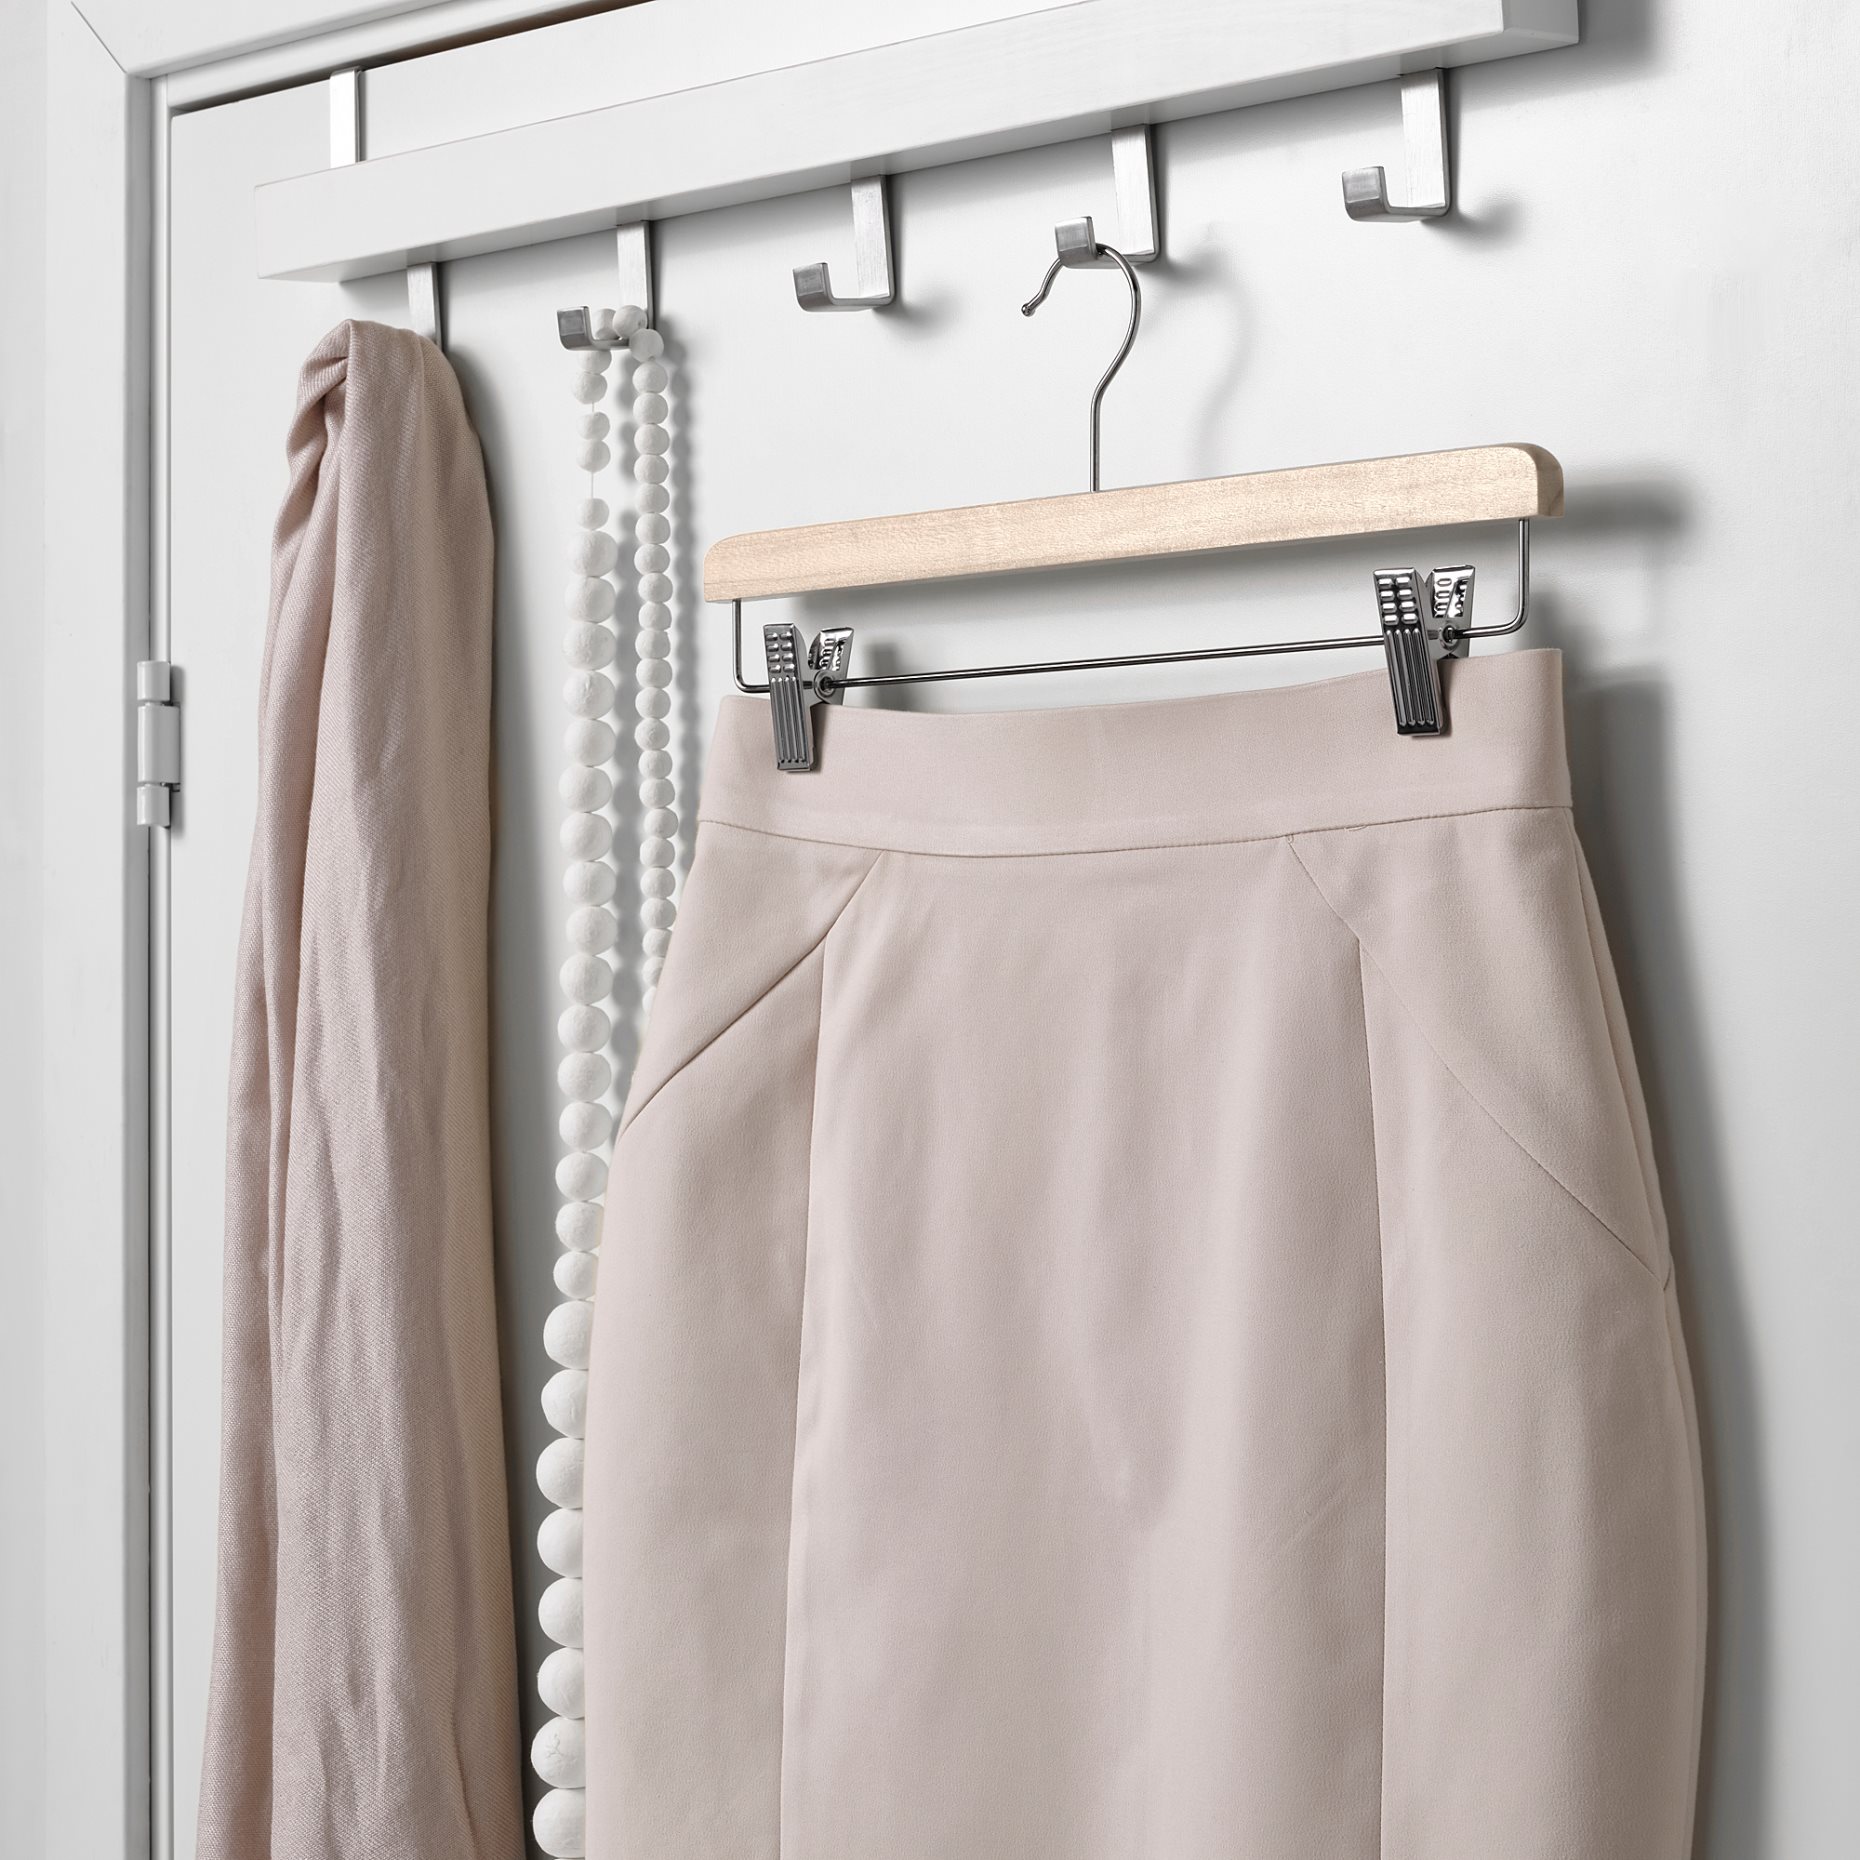 BUMERANG, skirt hanger, 404.324.79